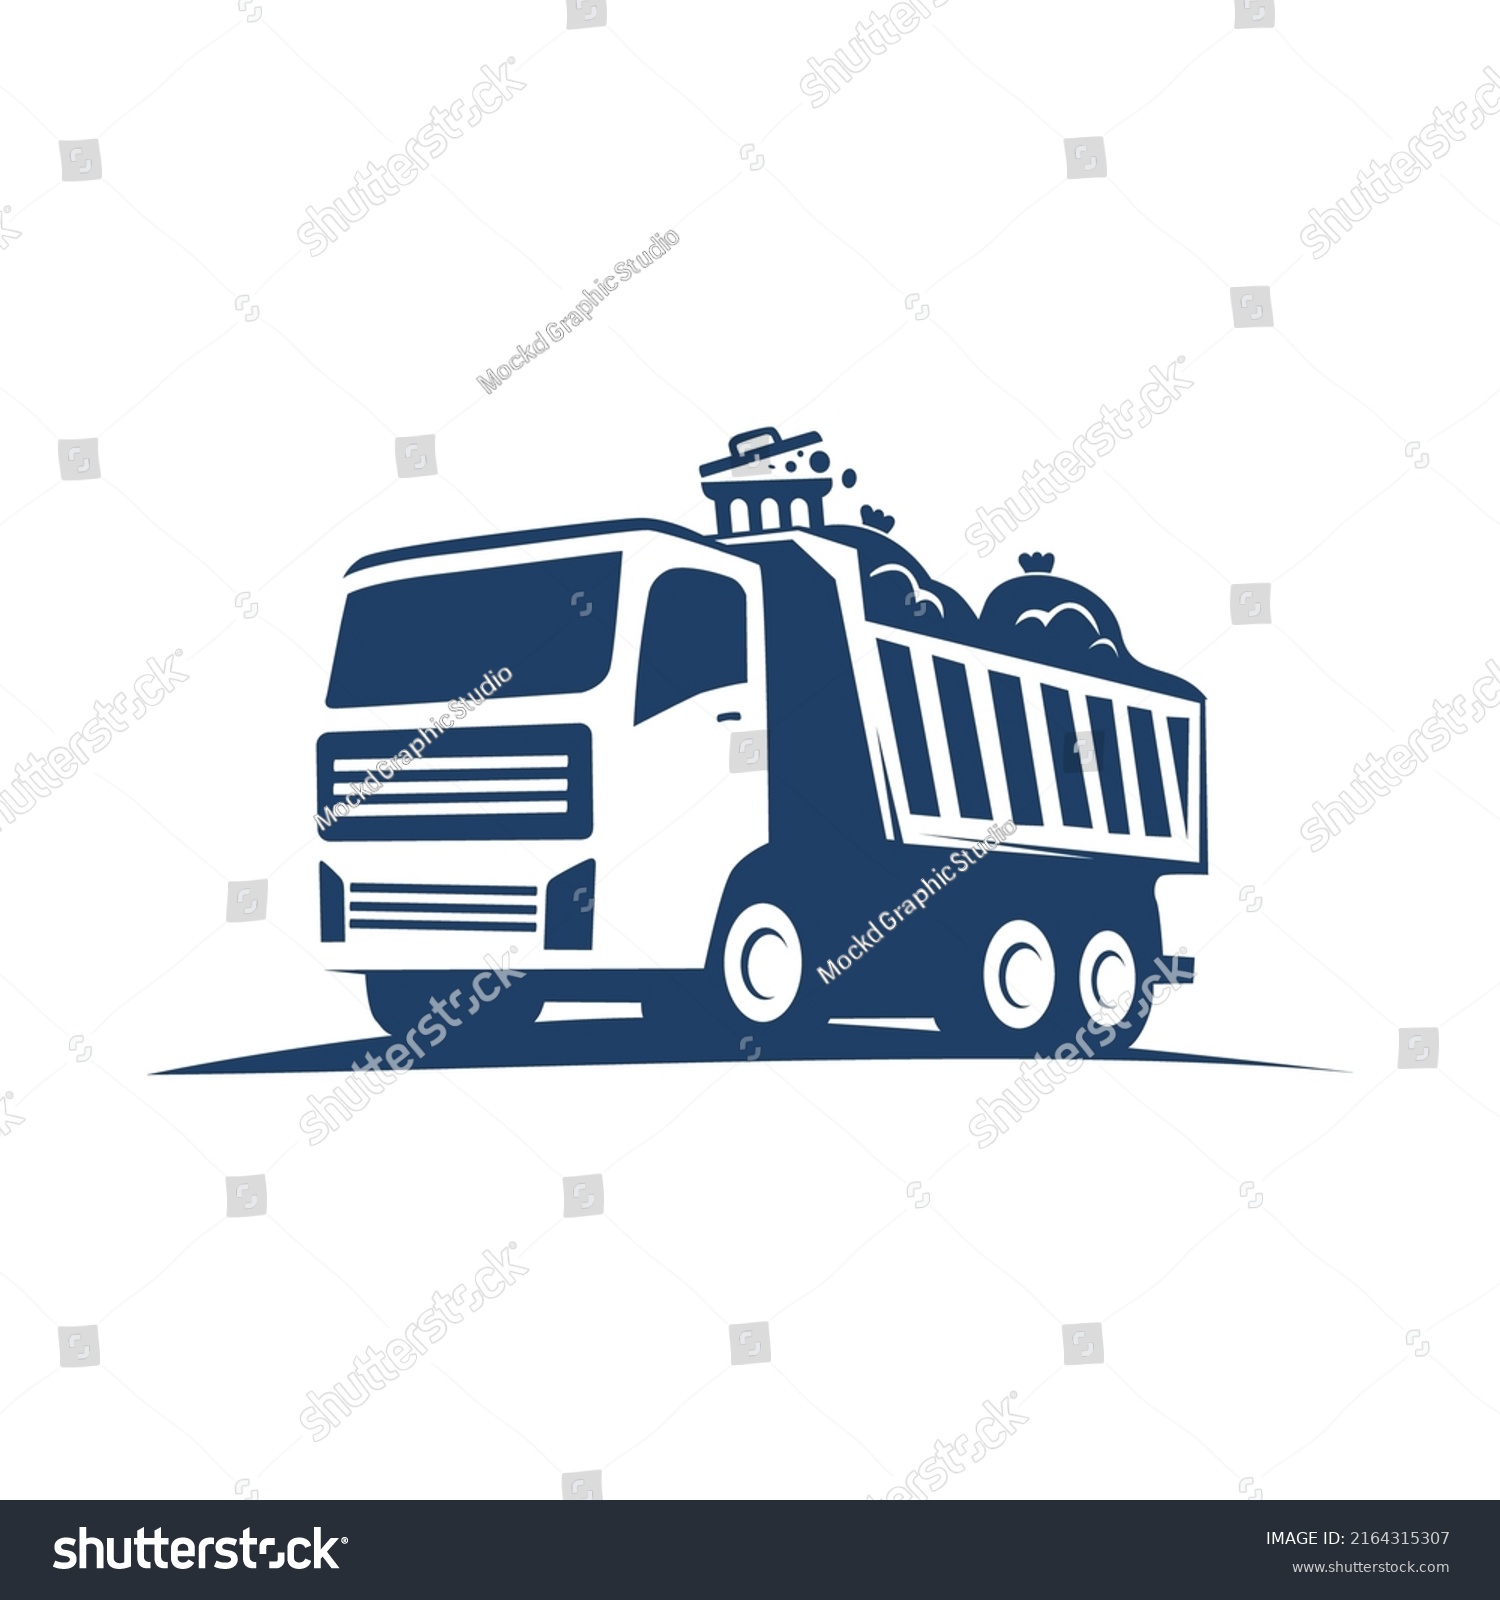 SVG of llustration of Roll-off (dumpster) truck, vector art, logo template. svg